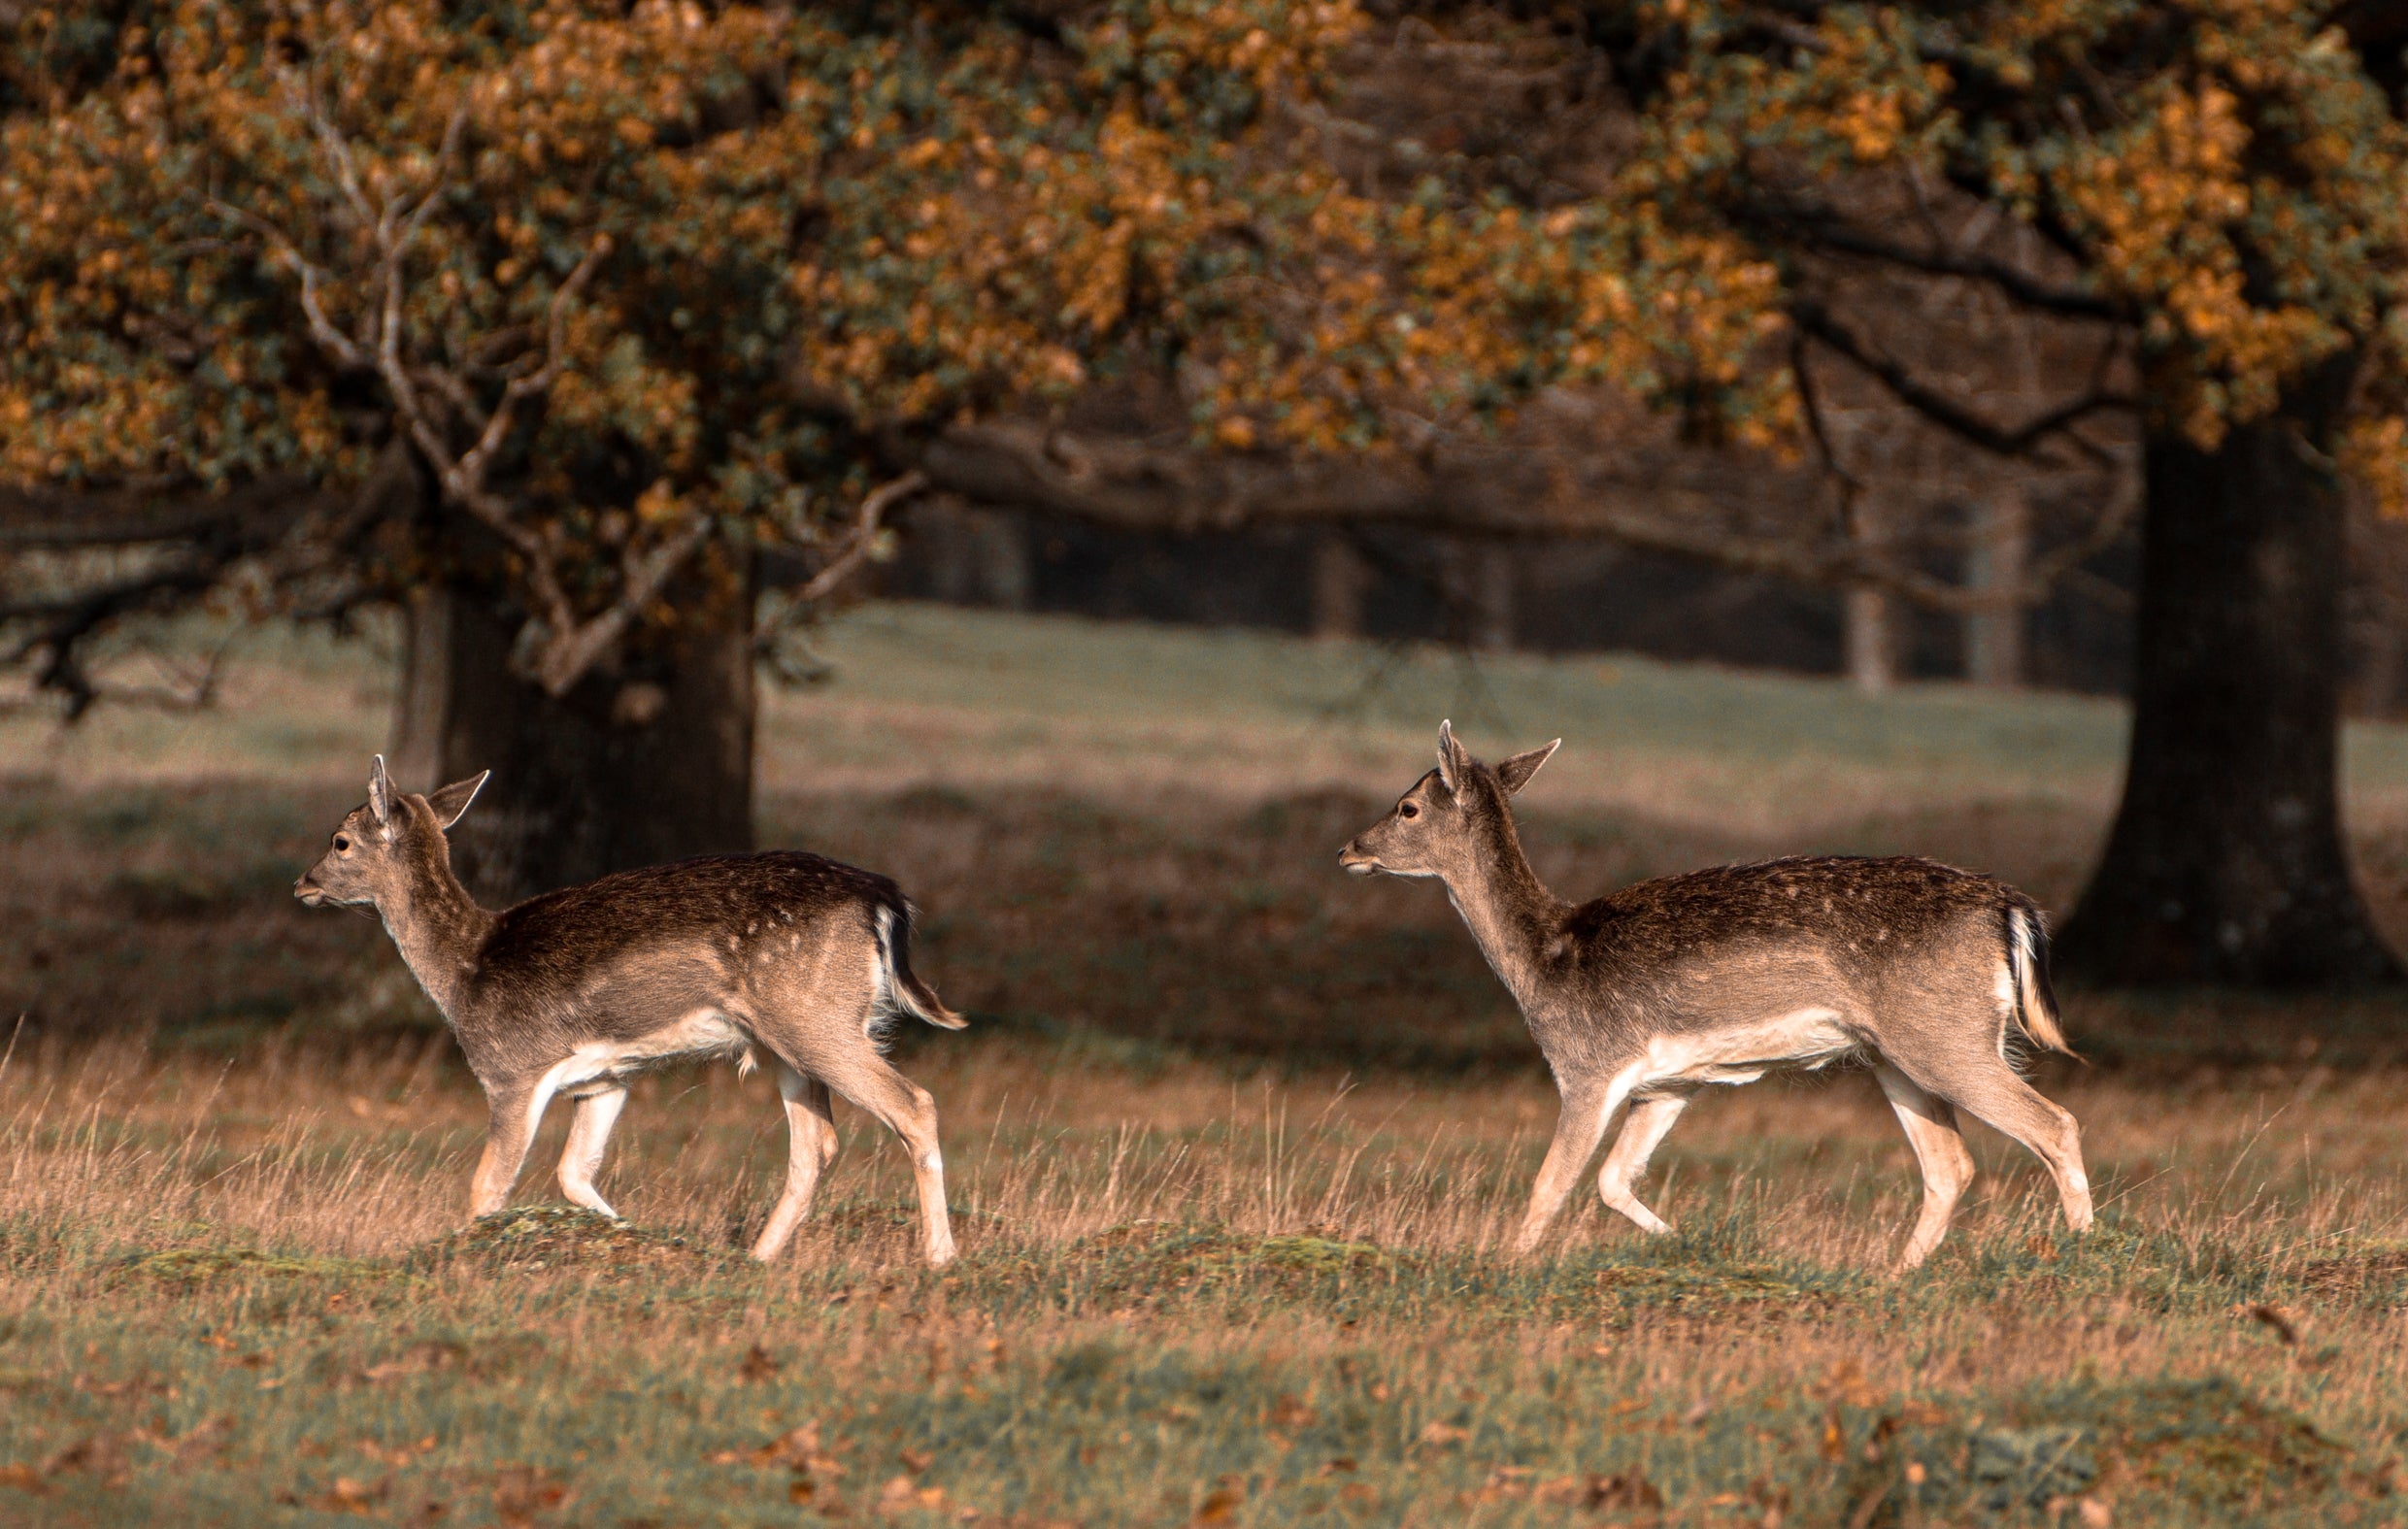 Predator Guard two young deer walking across a grassy field